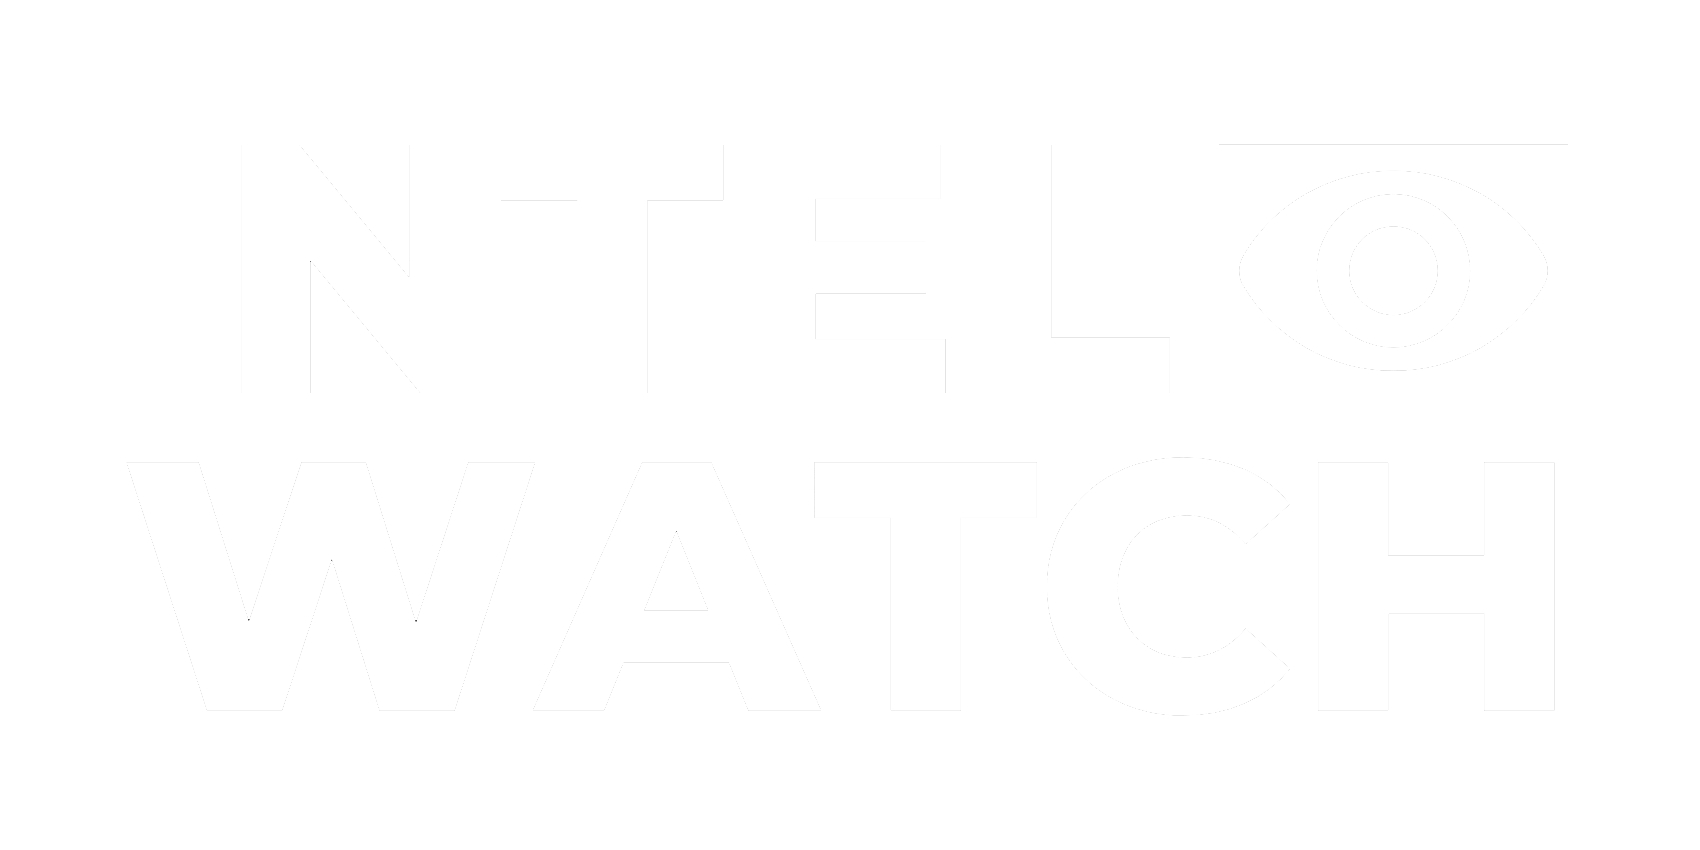 Intelwatch